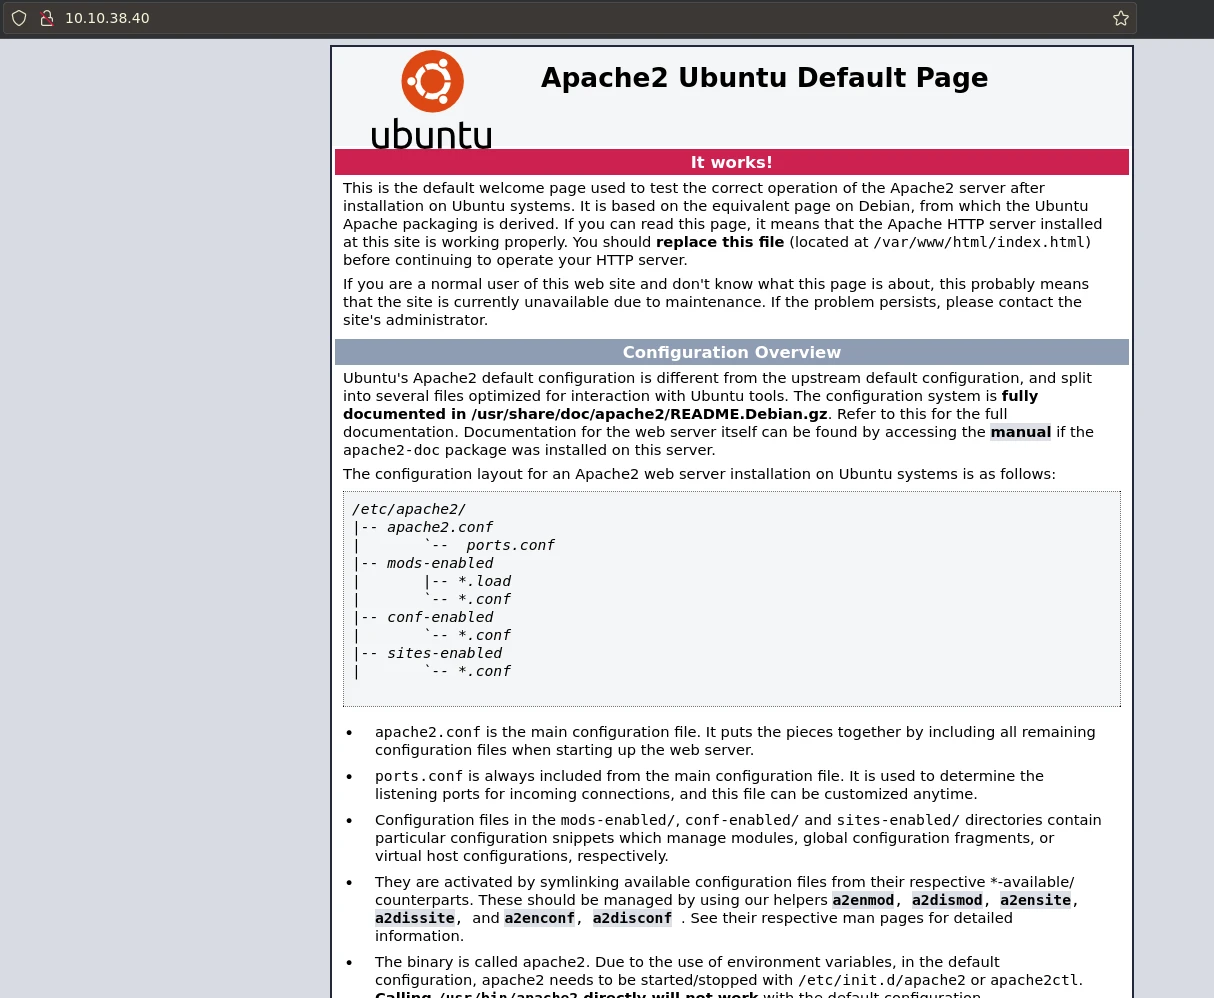 Apache Ubuntu default